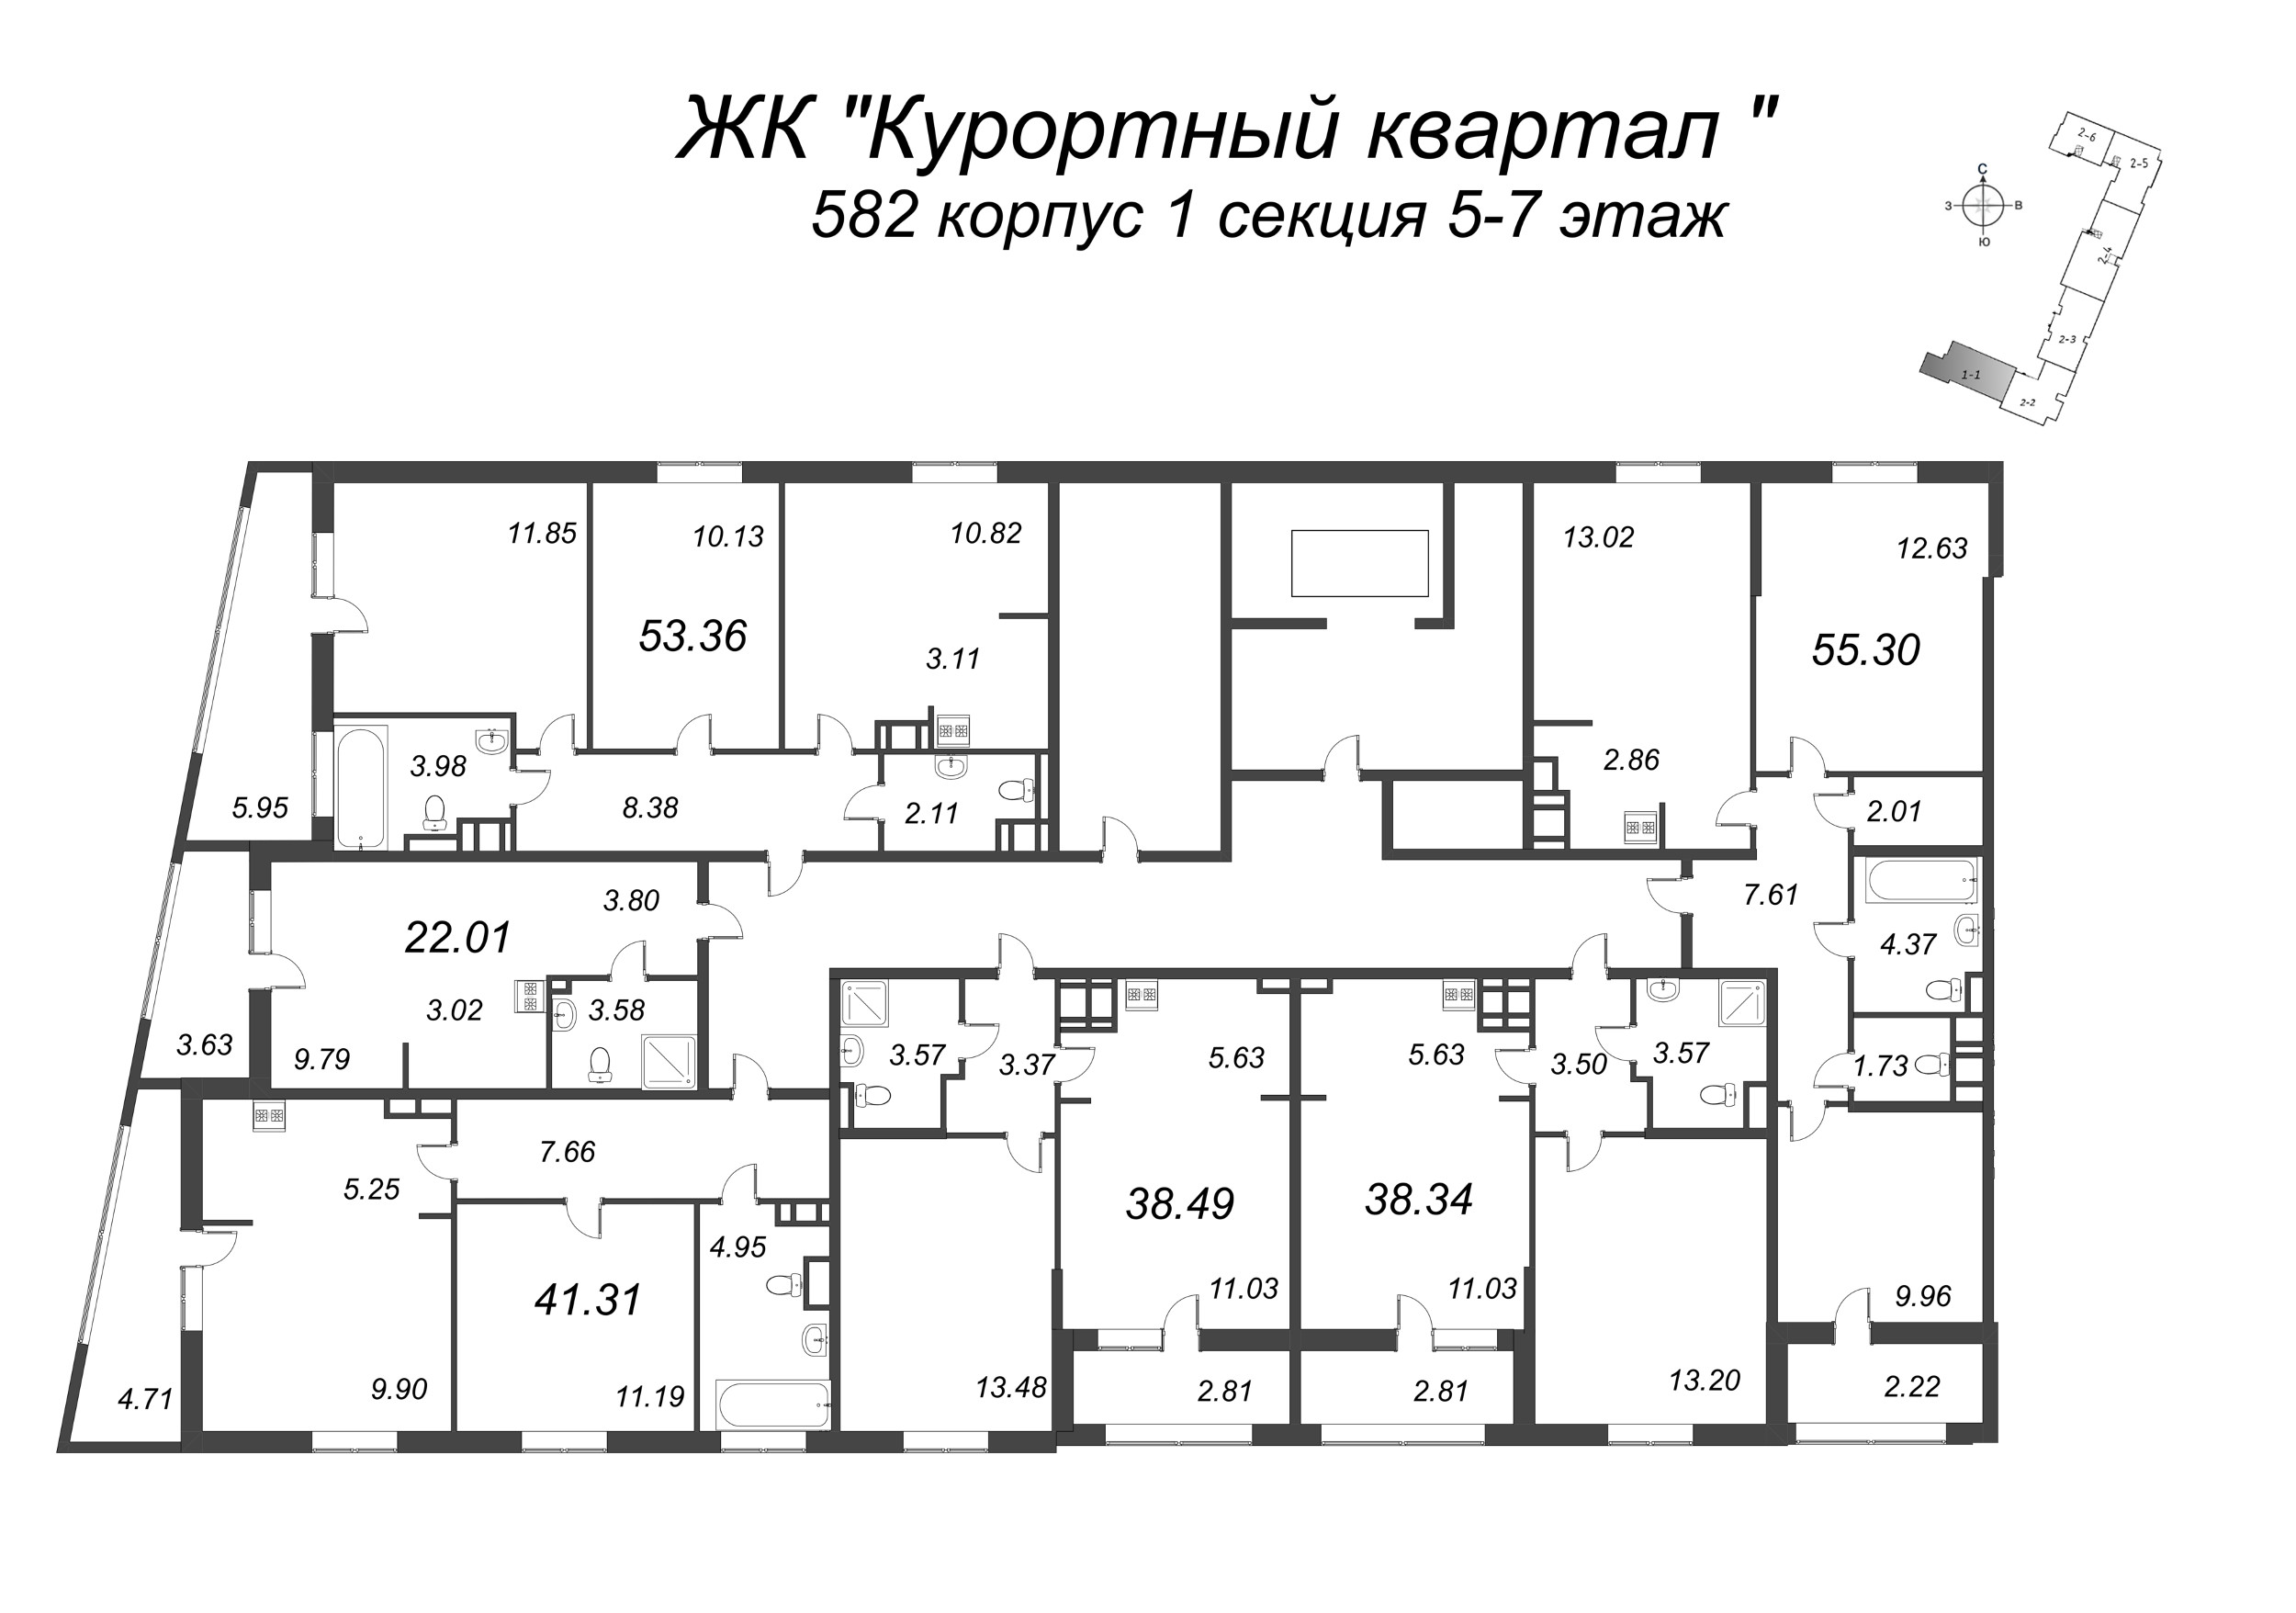 2-комнатная (Евро) квартира, 41.31 м² - планировка этажа